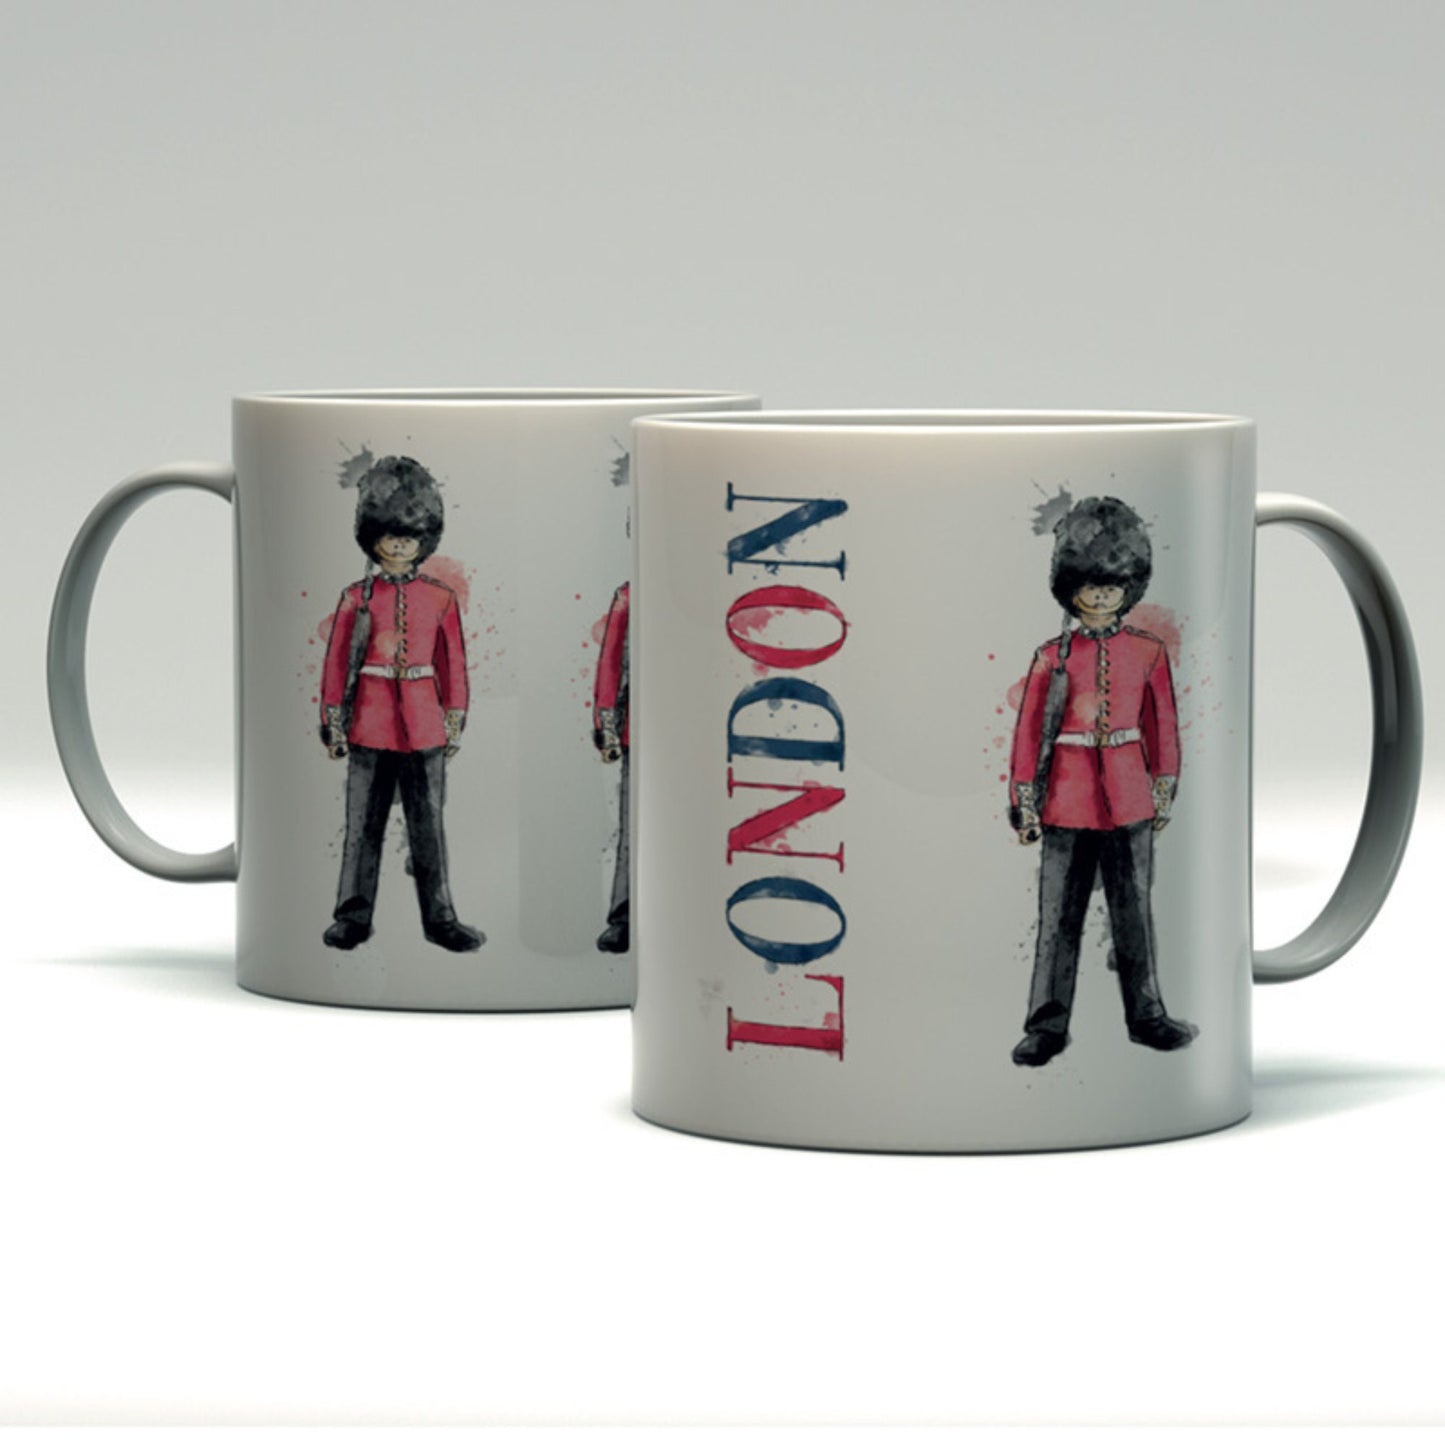 London Themed Porcelain Mug Original Stormtrooper London Mug London Scene Mug Or London Guardsmen Mug London Souvenir London Memorabilia